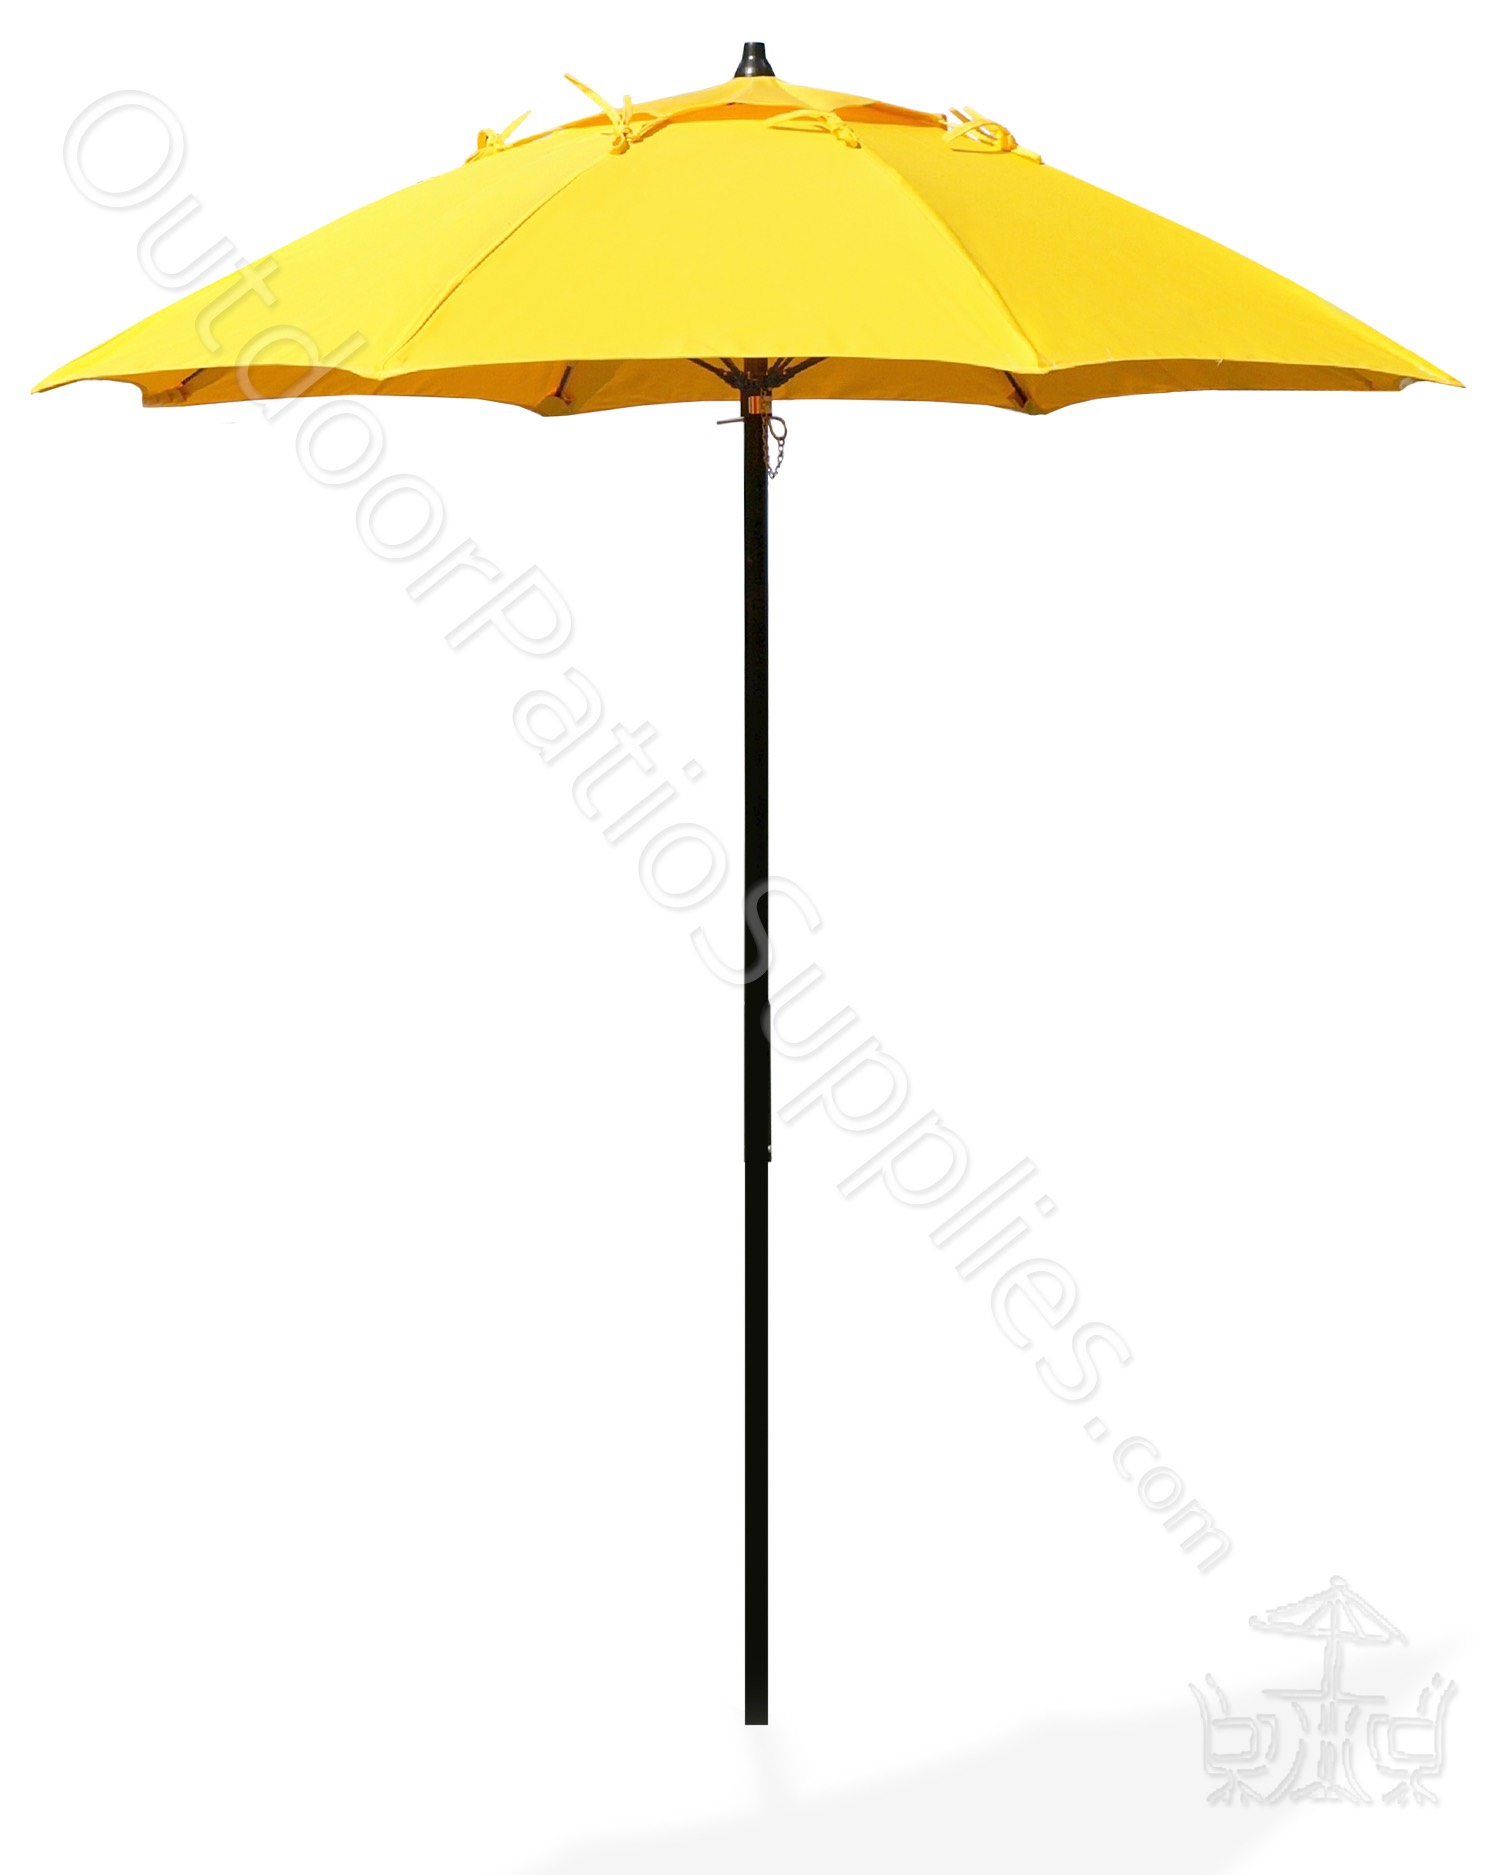 Las Olas umbrella